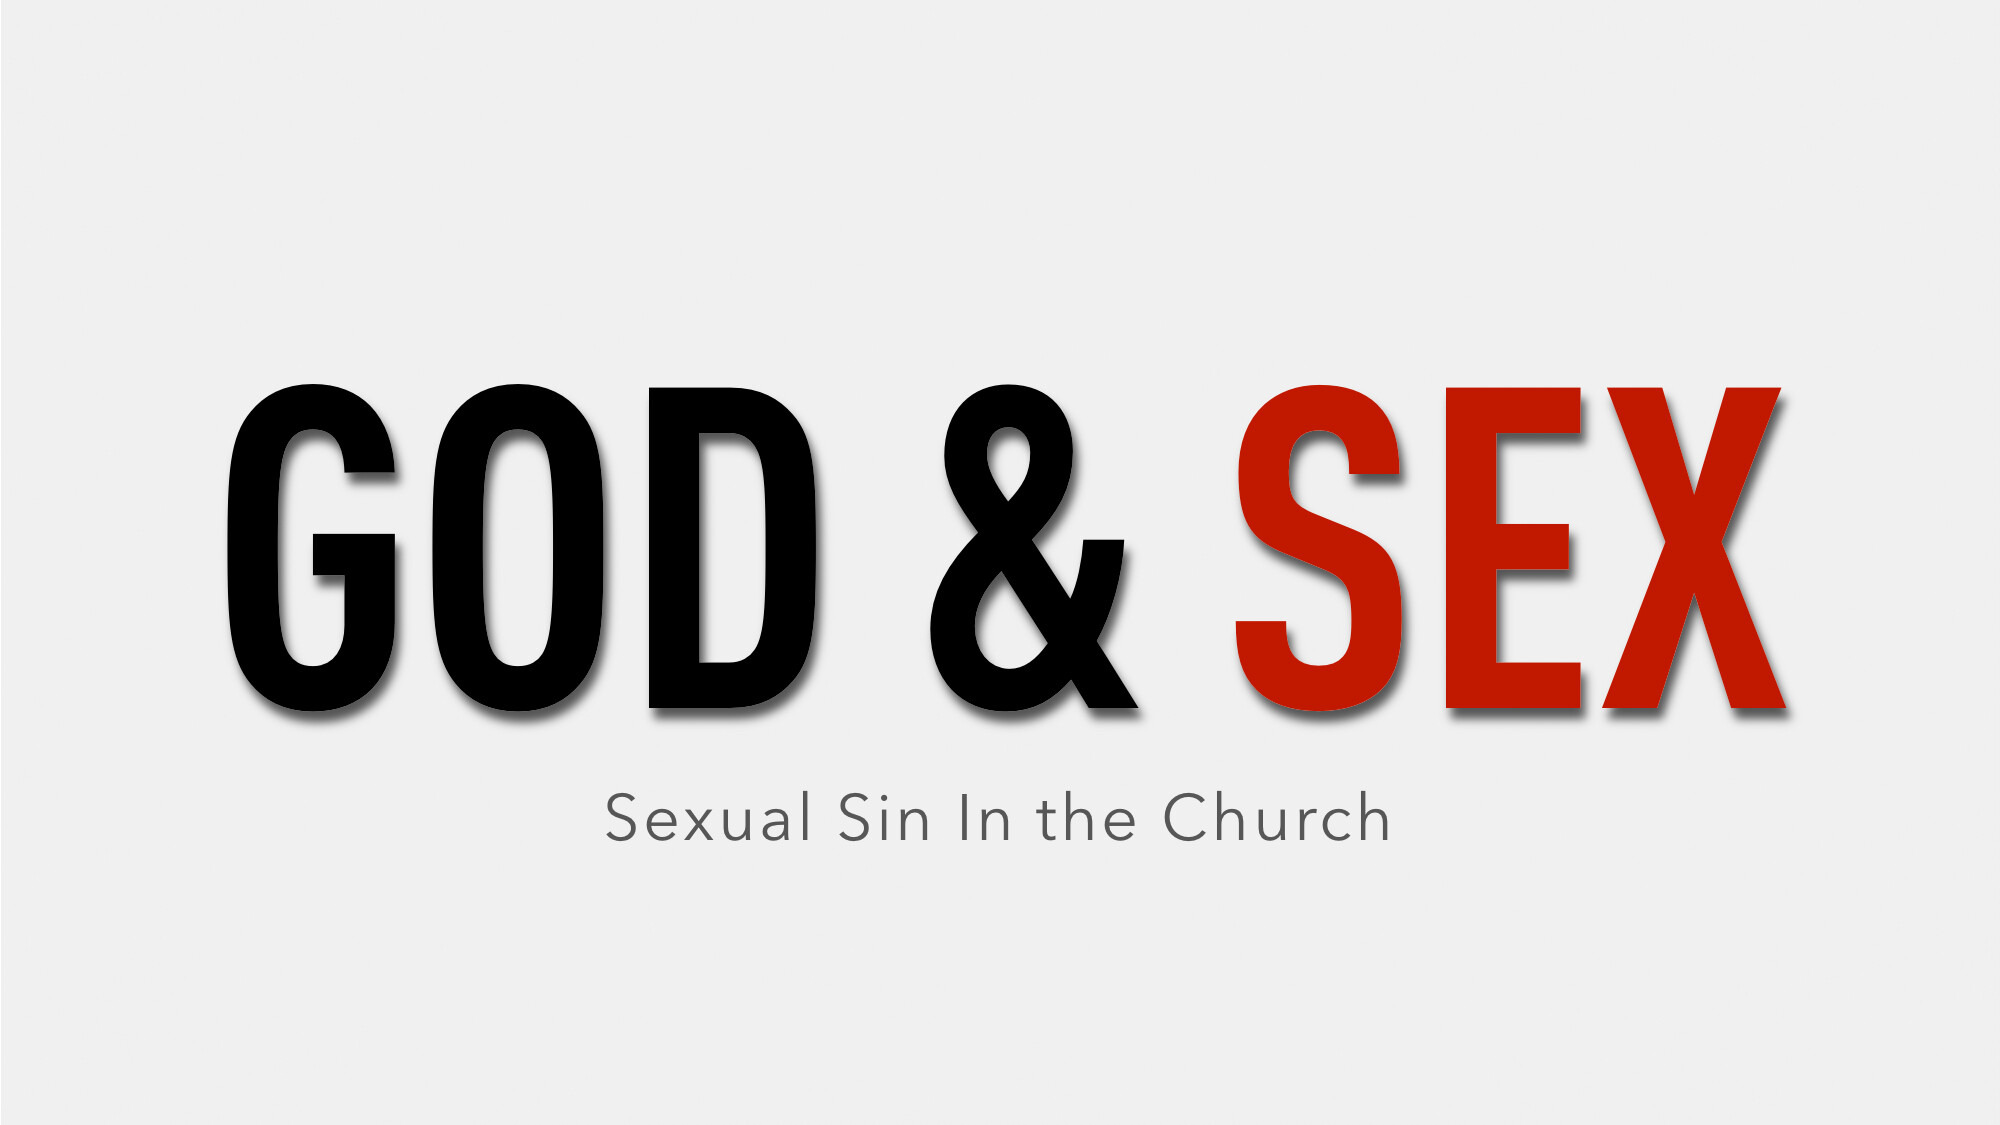 Sexual Sin In the Church